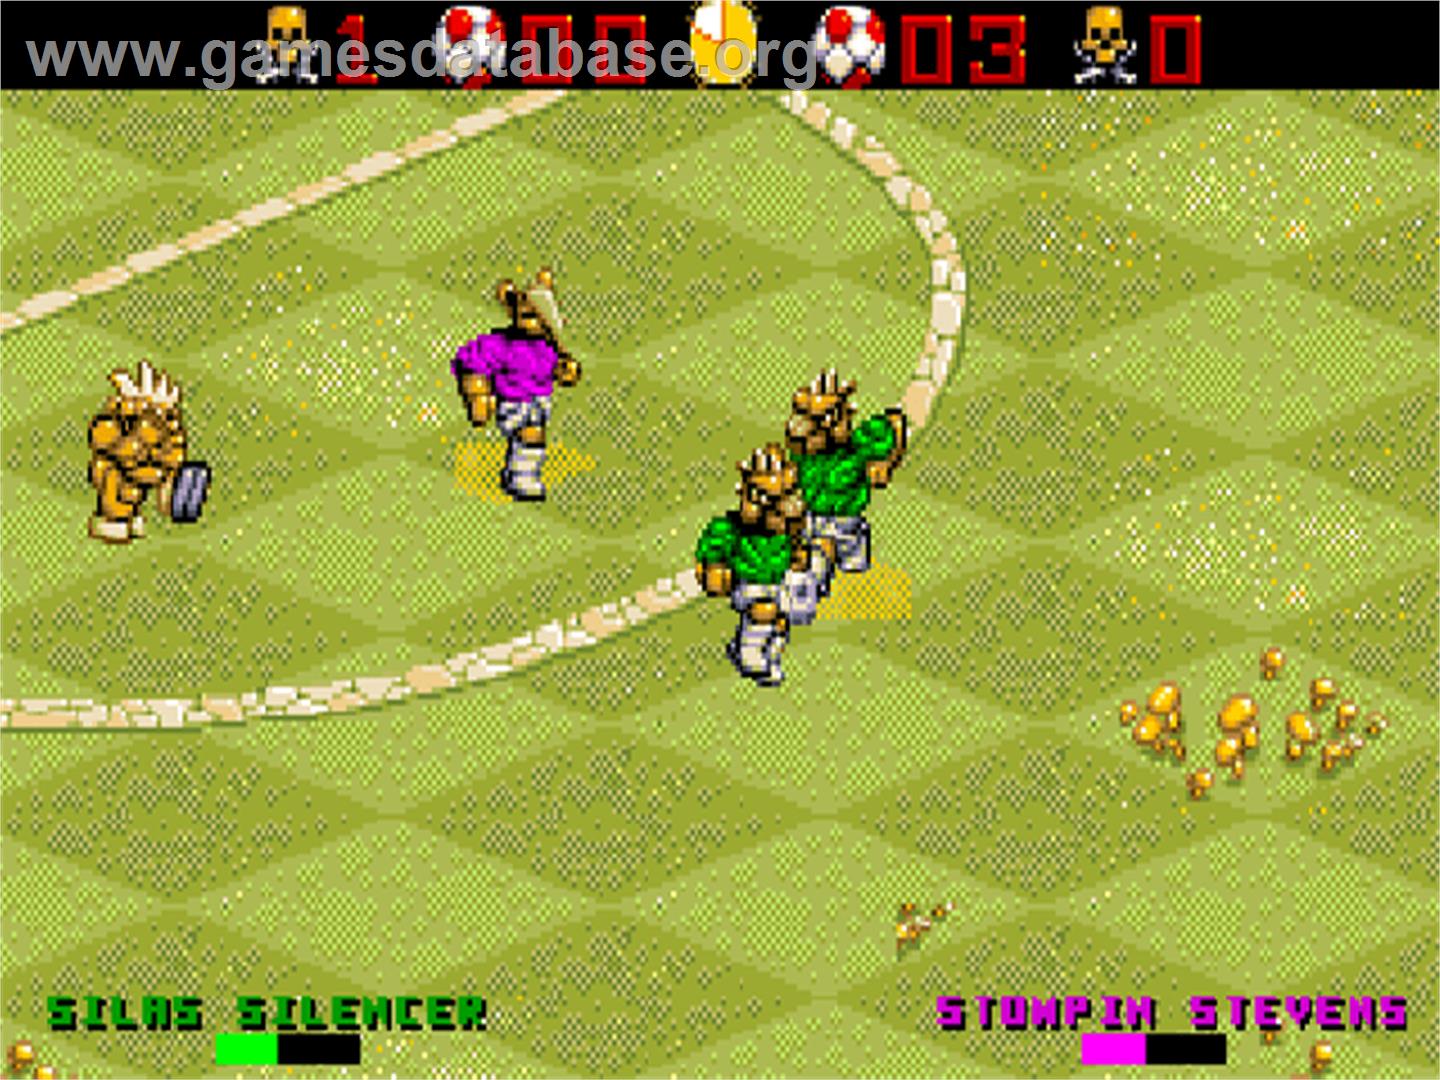 Wild Cup Soccer - Commodore Amiga CD32 - Artwork - In Game